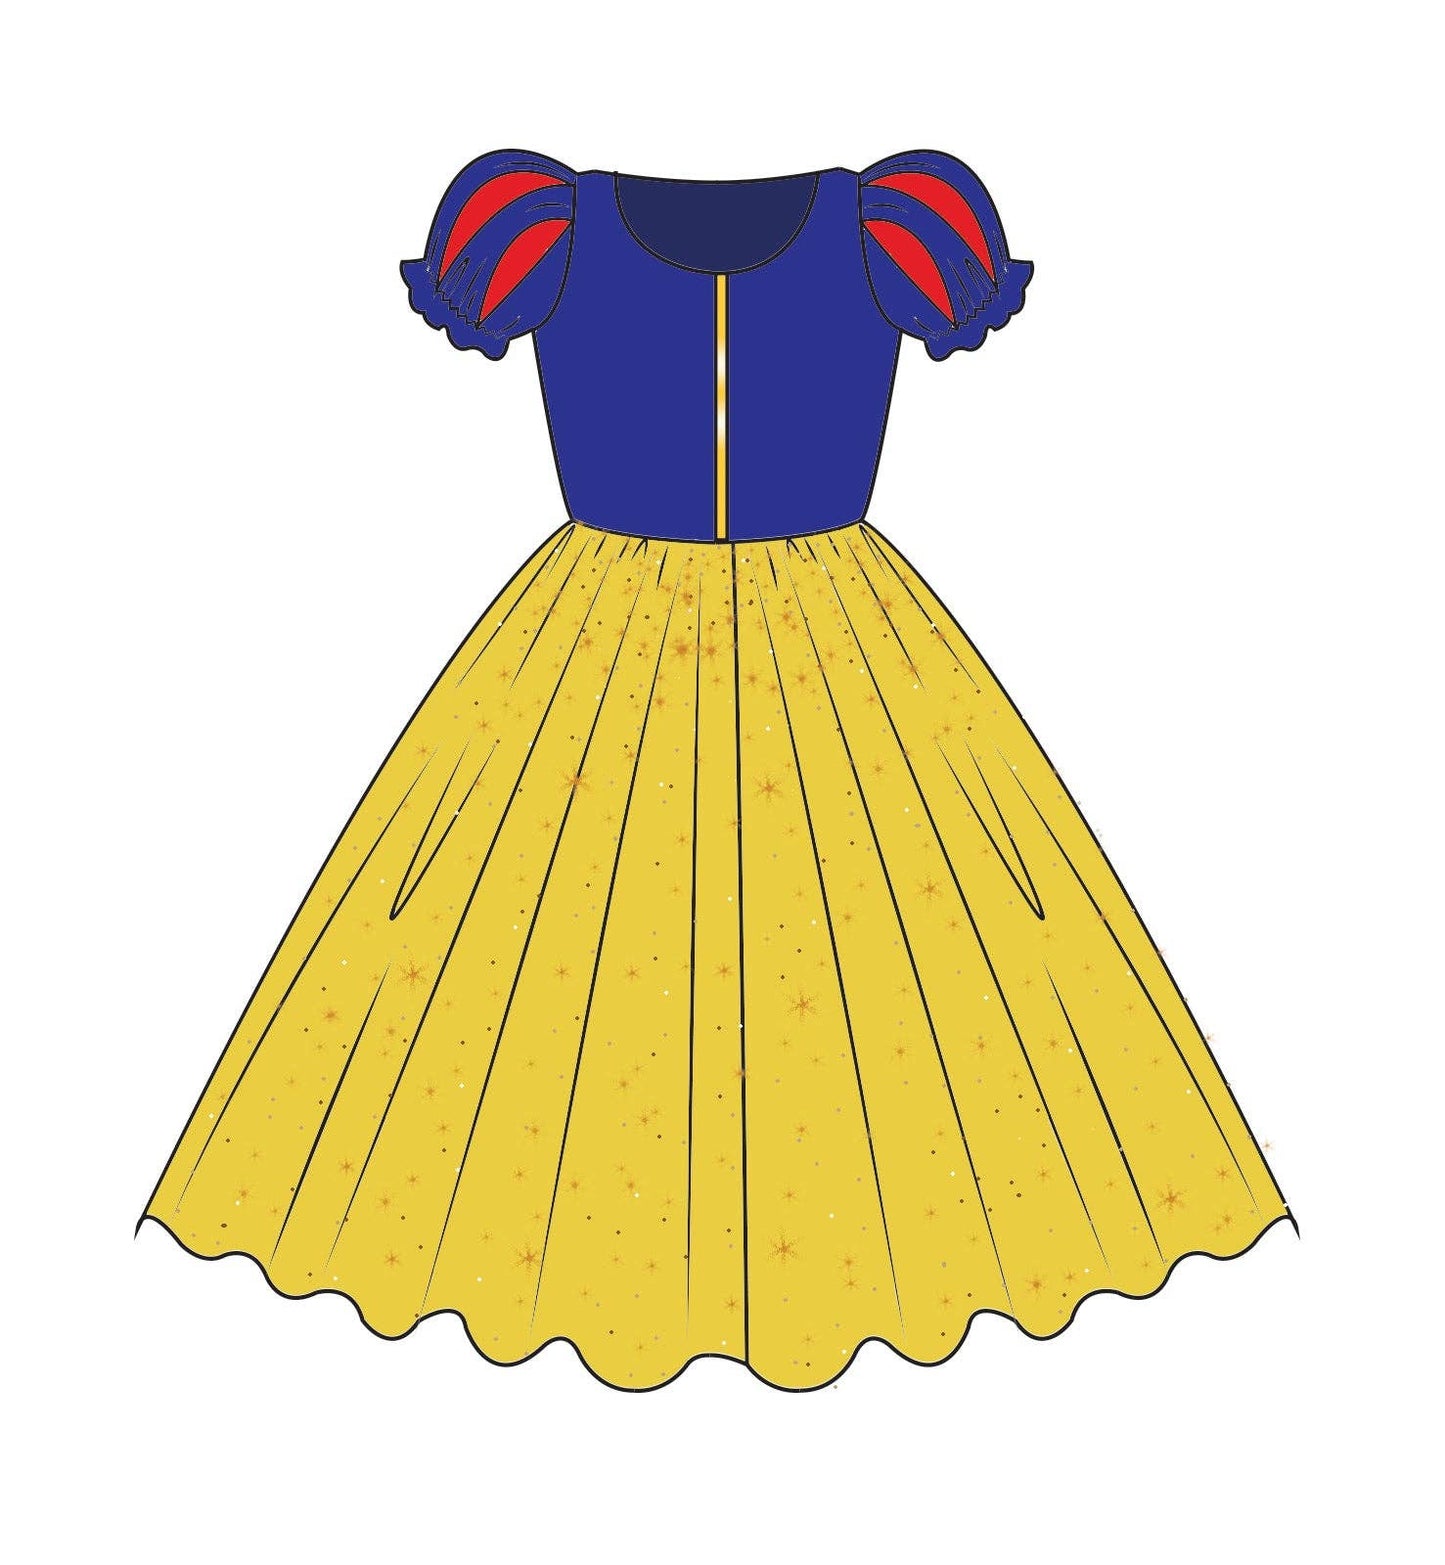 Fairest Princess Costume Dress (XS) 2-3 years